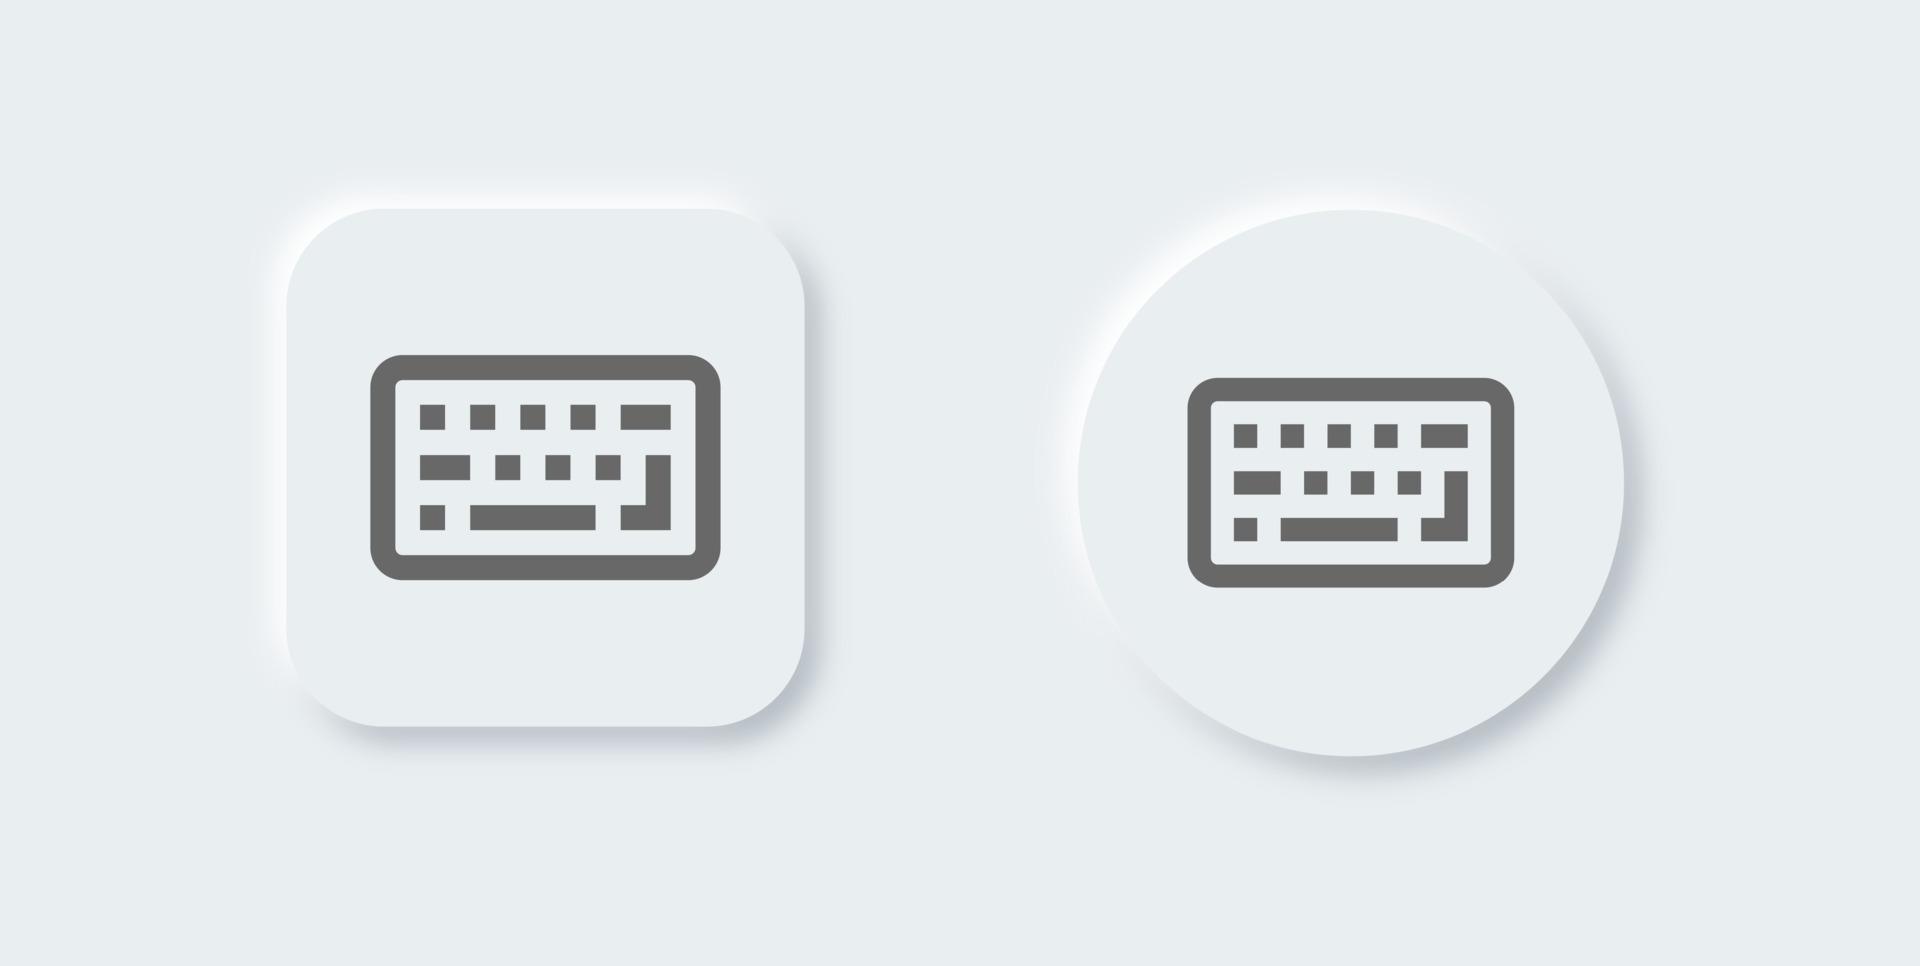 tangentbord linje ikon i neomorf design stil. dator knapp tecken vektor illustration.